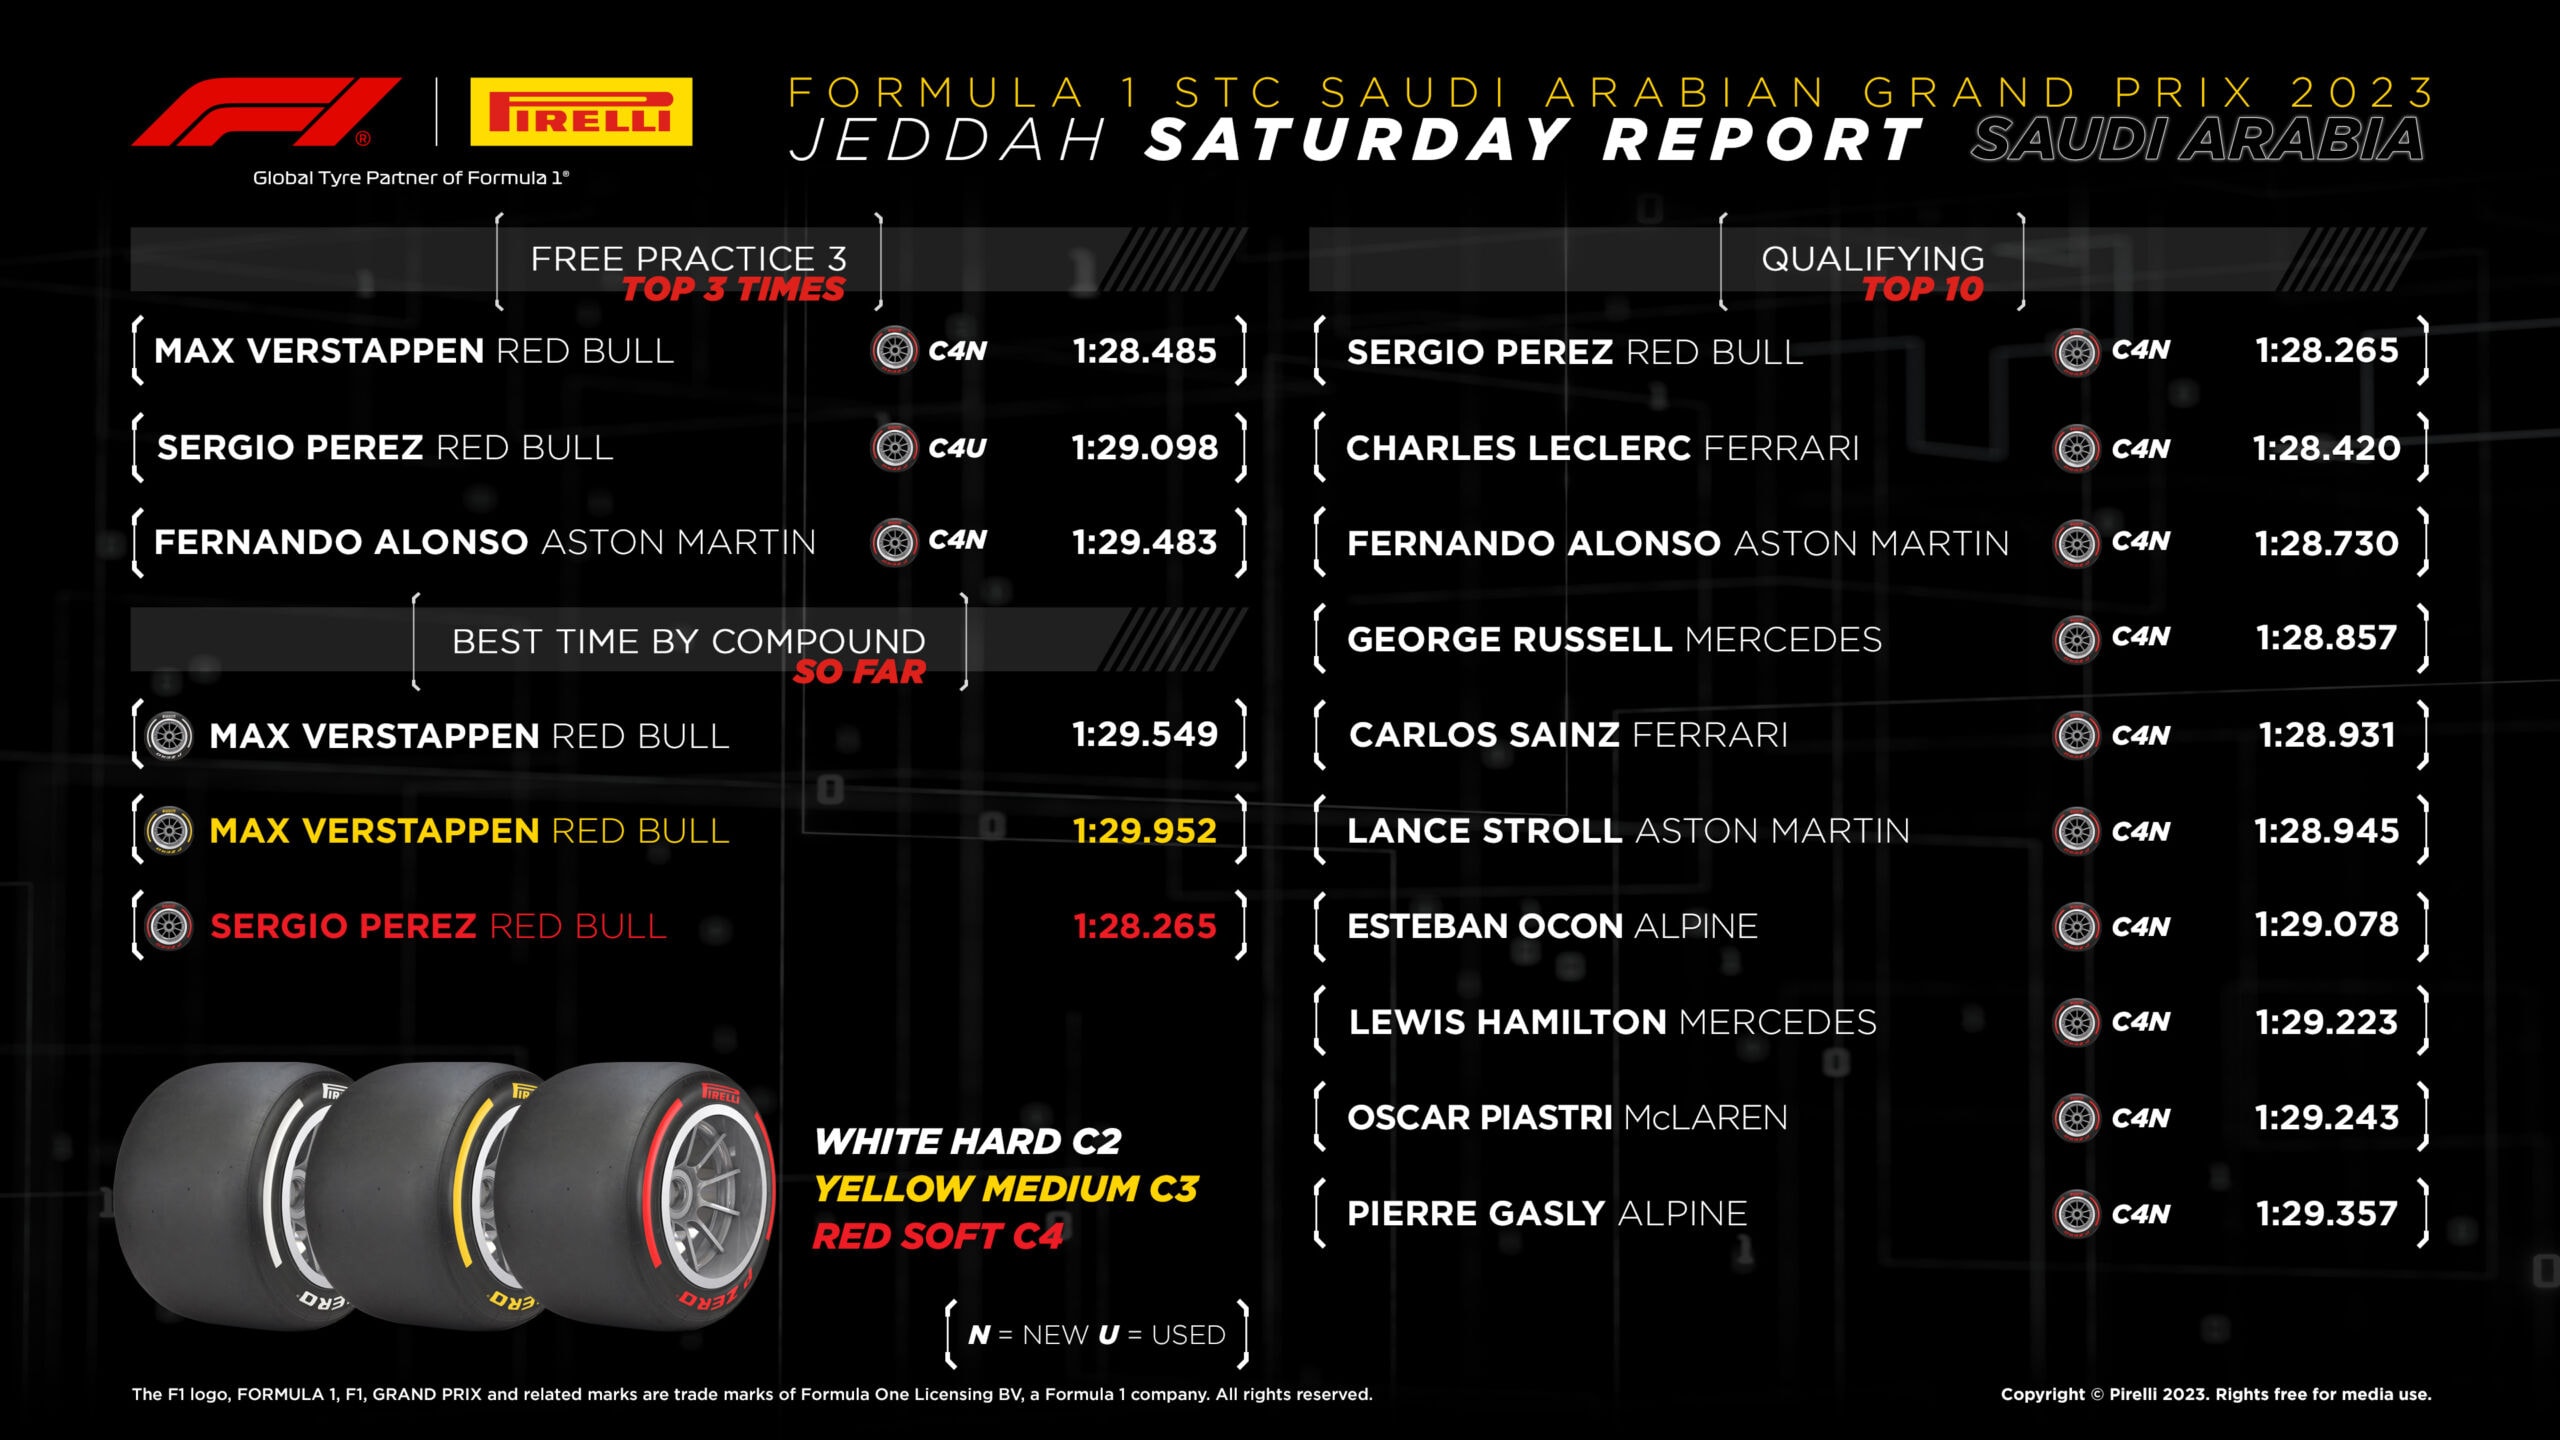 2023 Saudi Arabia Grand Prix: Qualifying Tyre Analysis